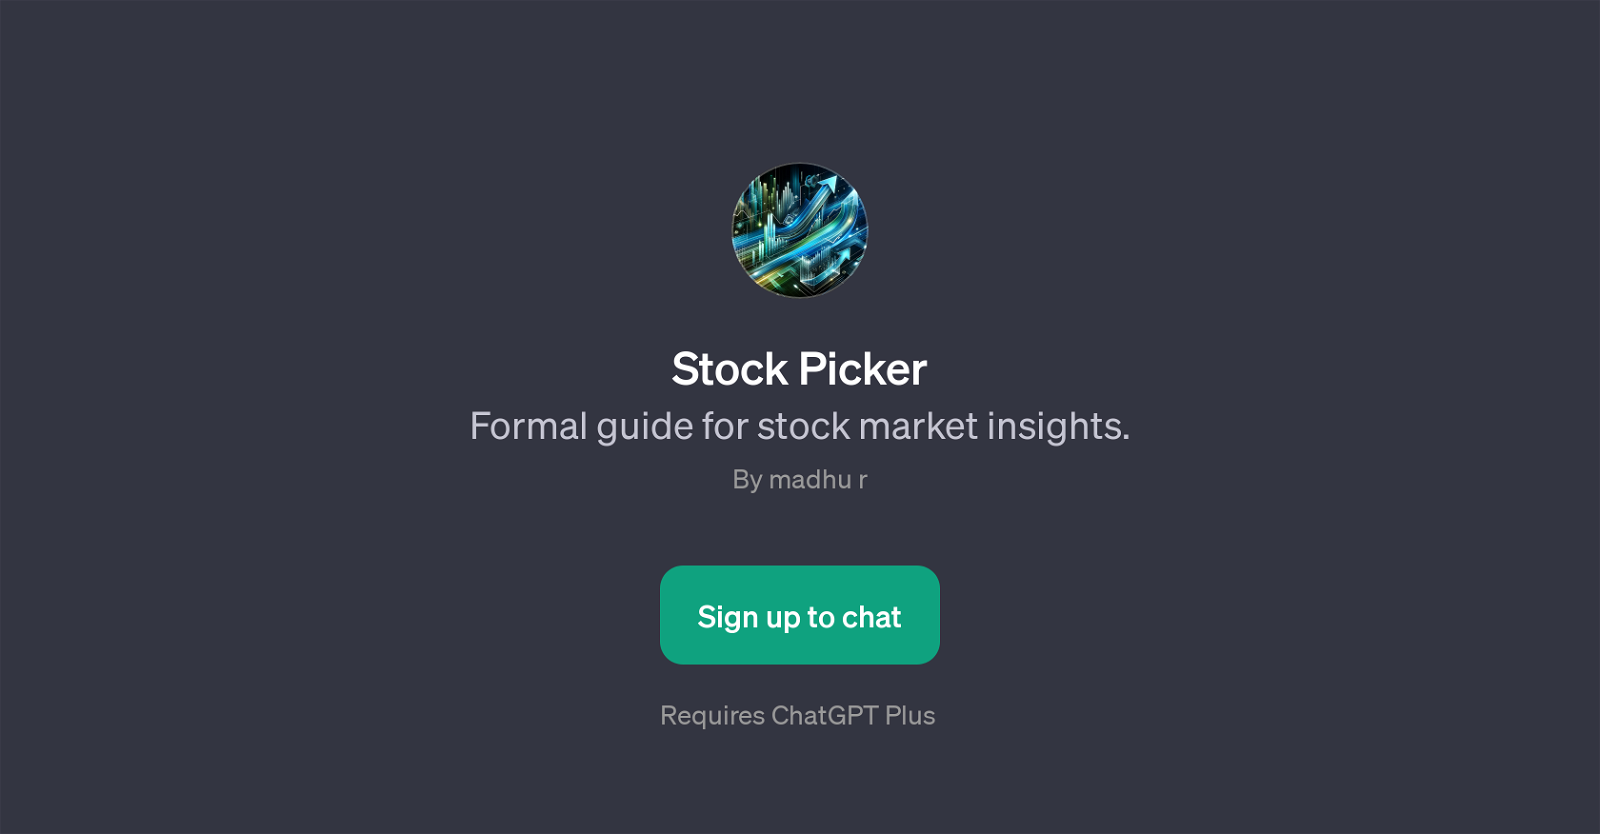 Stock Picker website